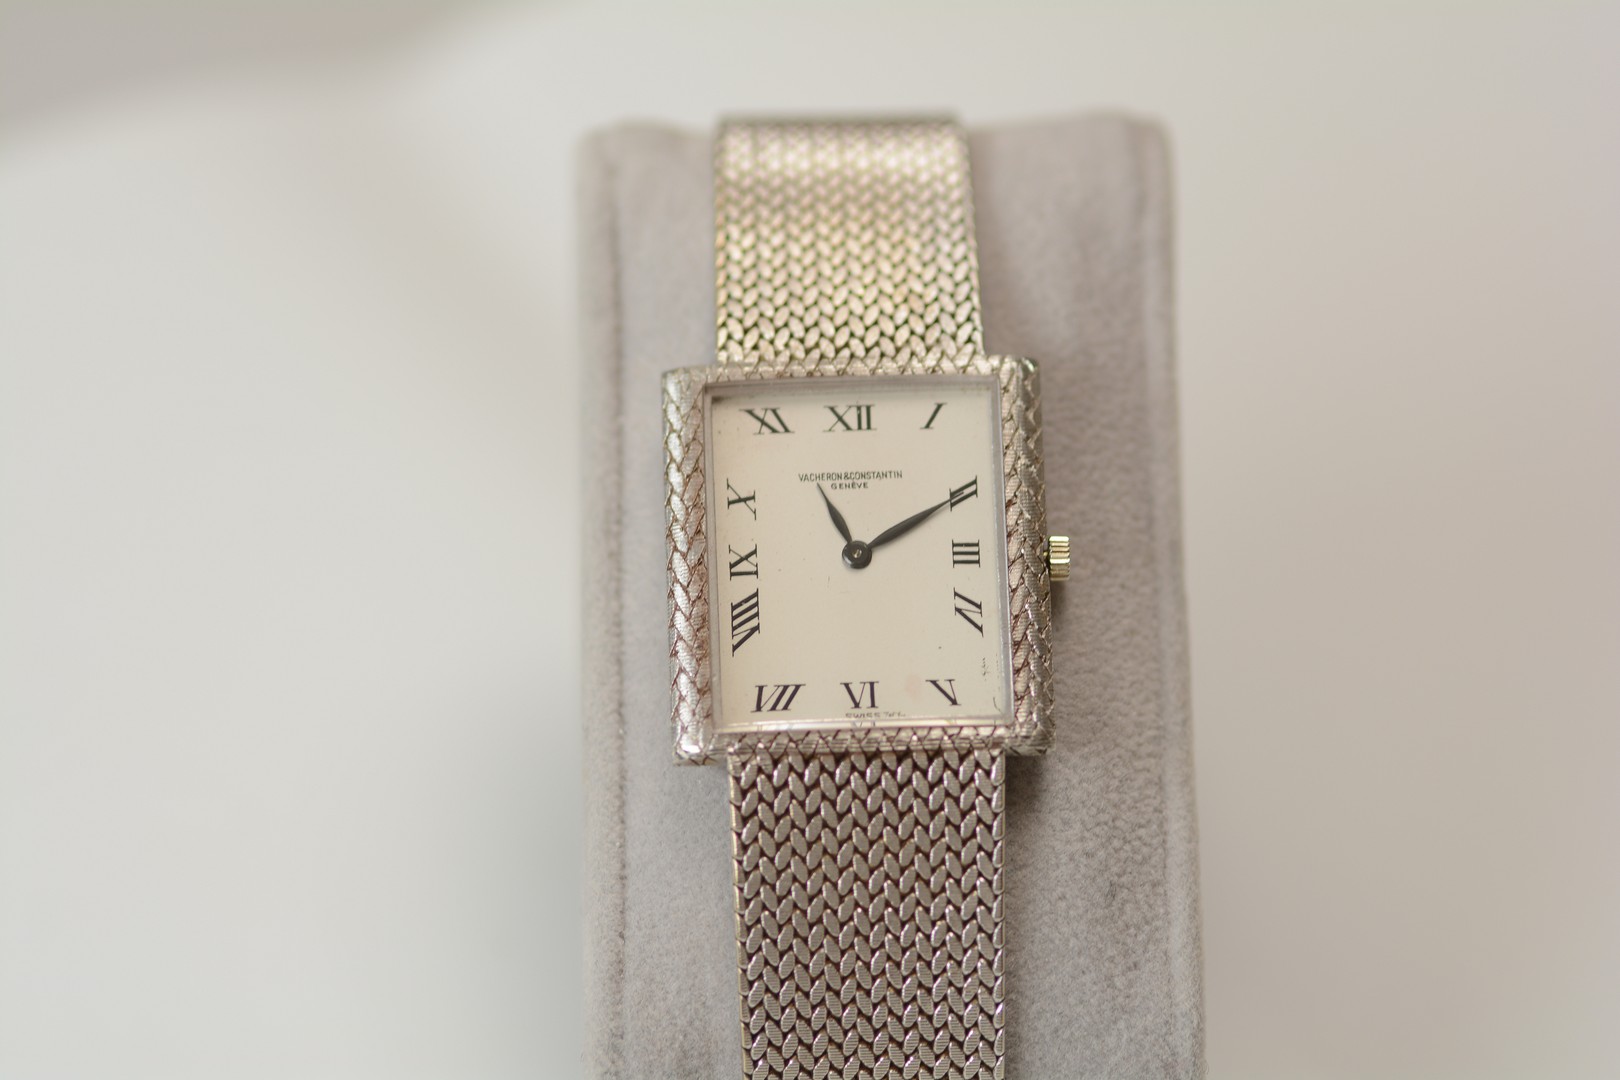 Vacheron Constantin / Rectangular - Ultra thin - 1960s - Unisex White gold Wrist Watch - Image 4 of 12